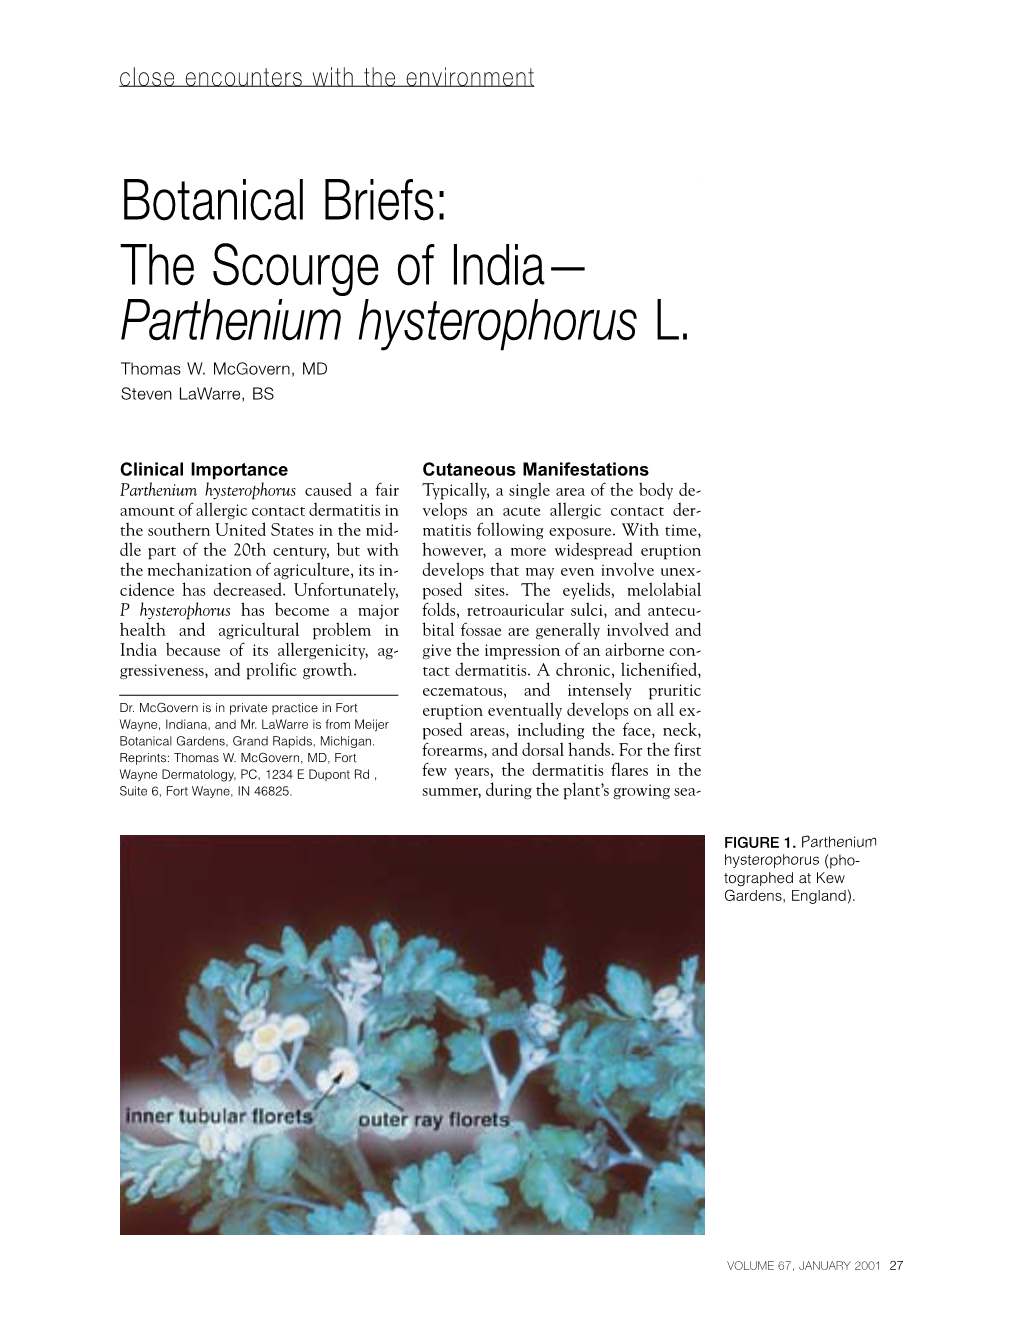 The Scourge of India— Parthenium Hysterophorus L. Thomas W